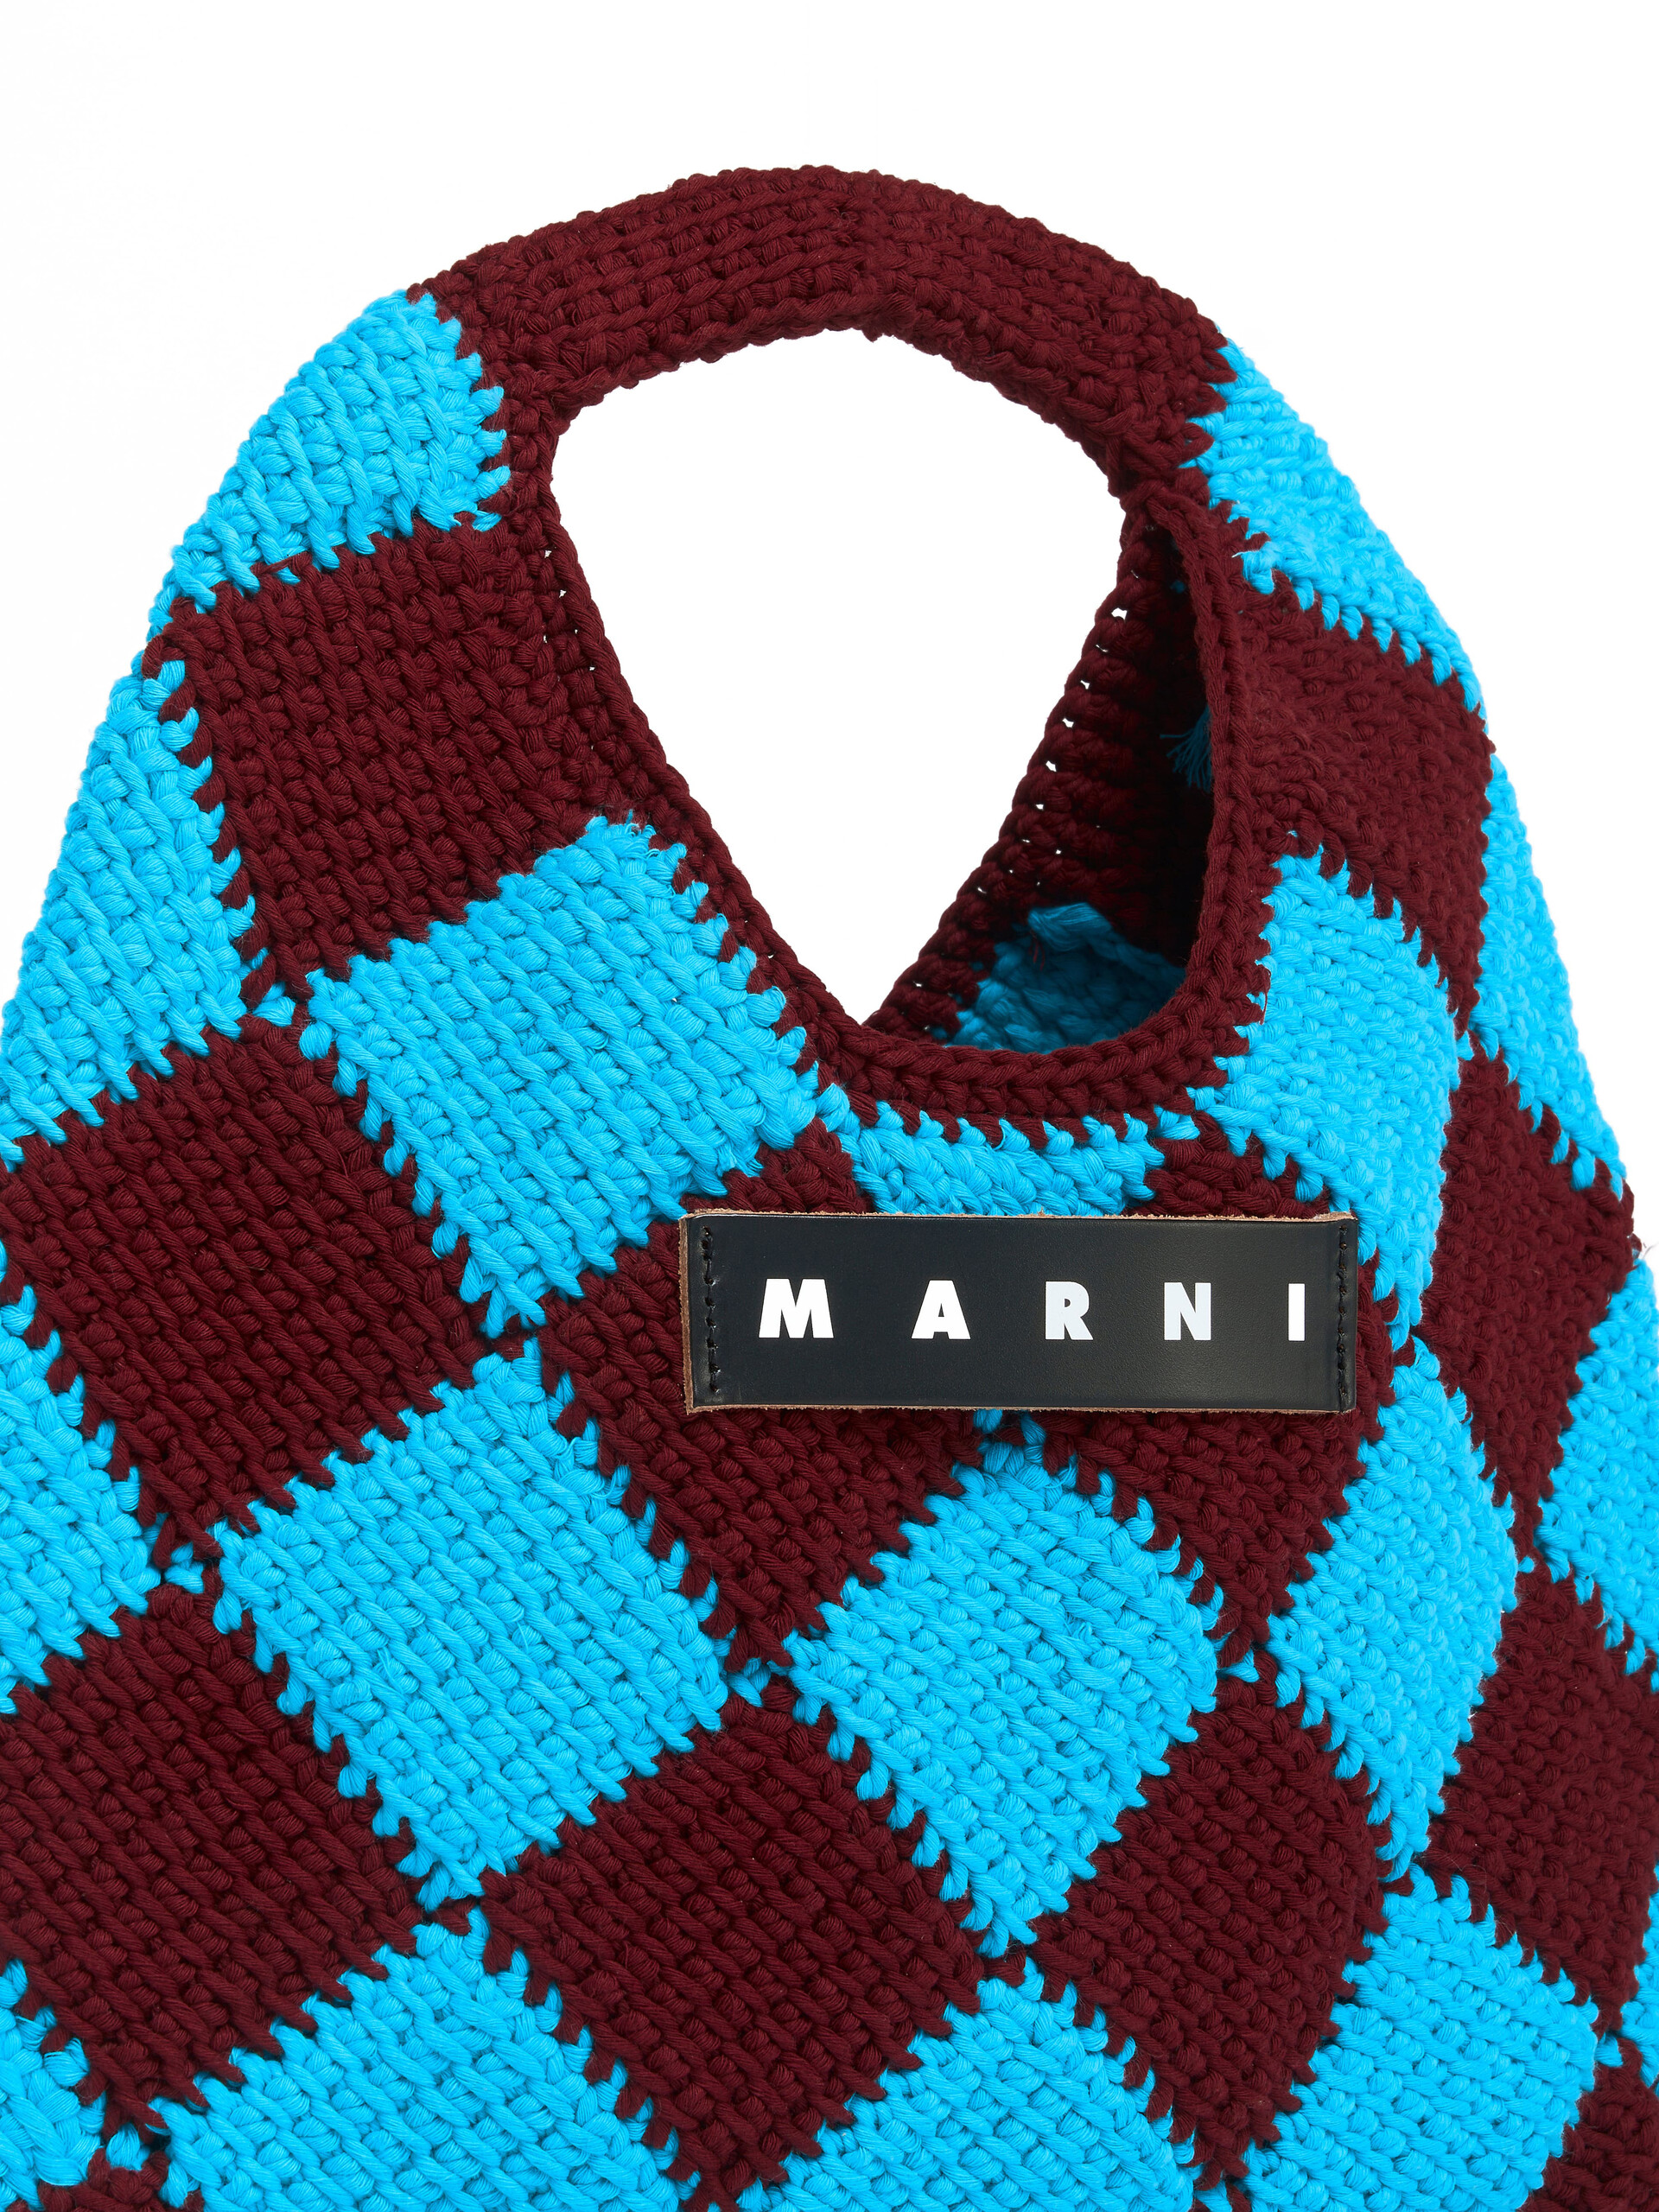 MARNI MARKET DIAMOND mini bag in blue and brown tech wool - Shopping Bags - Image 4